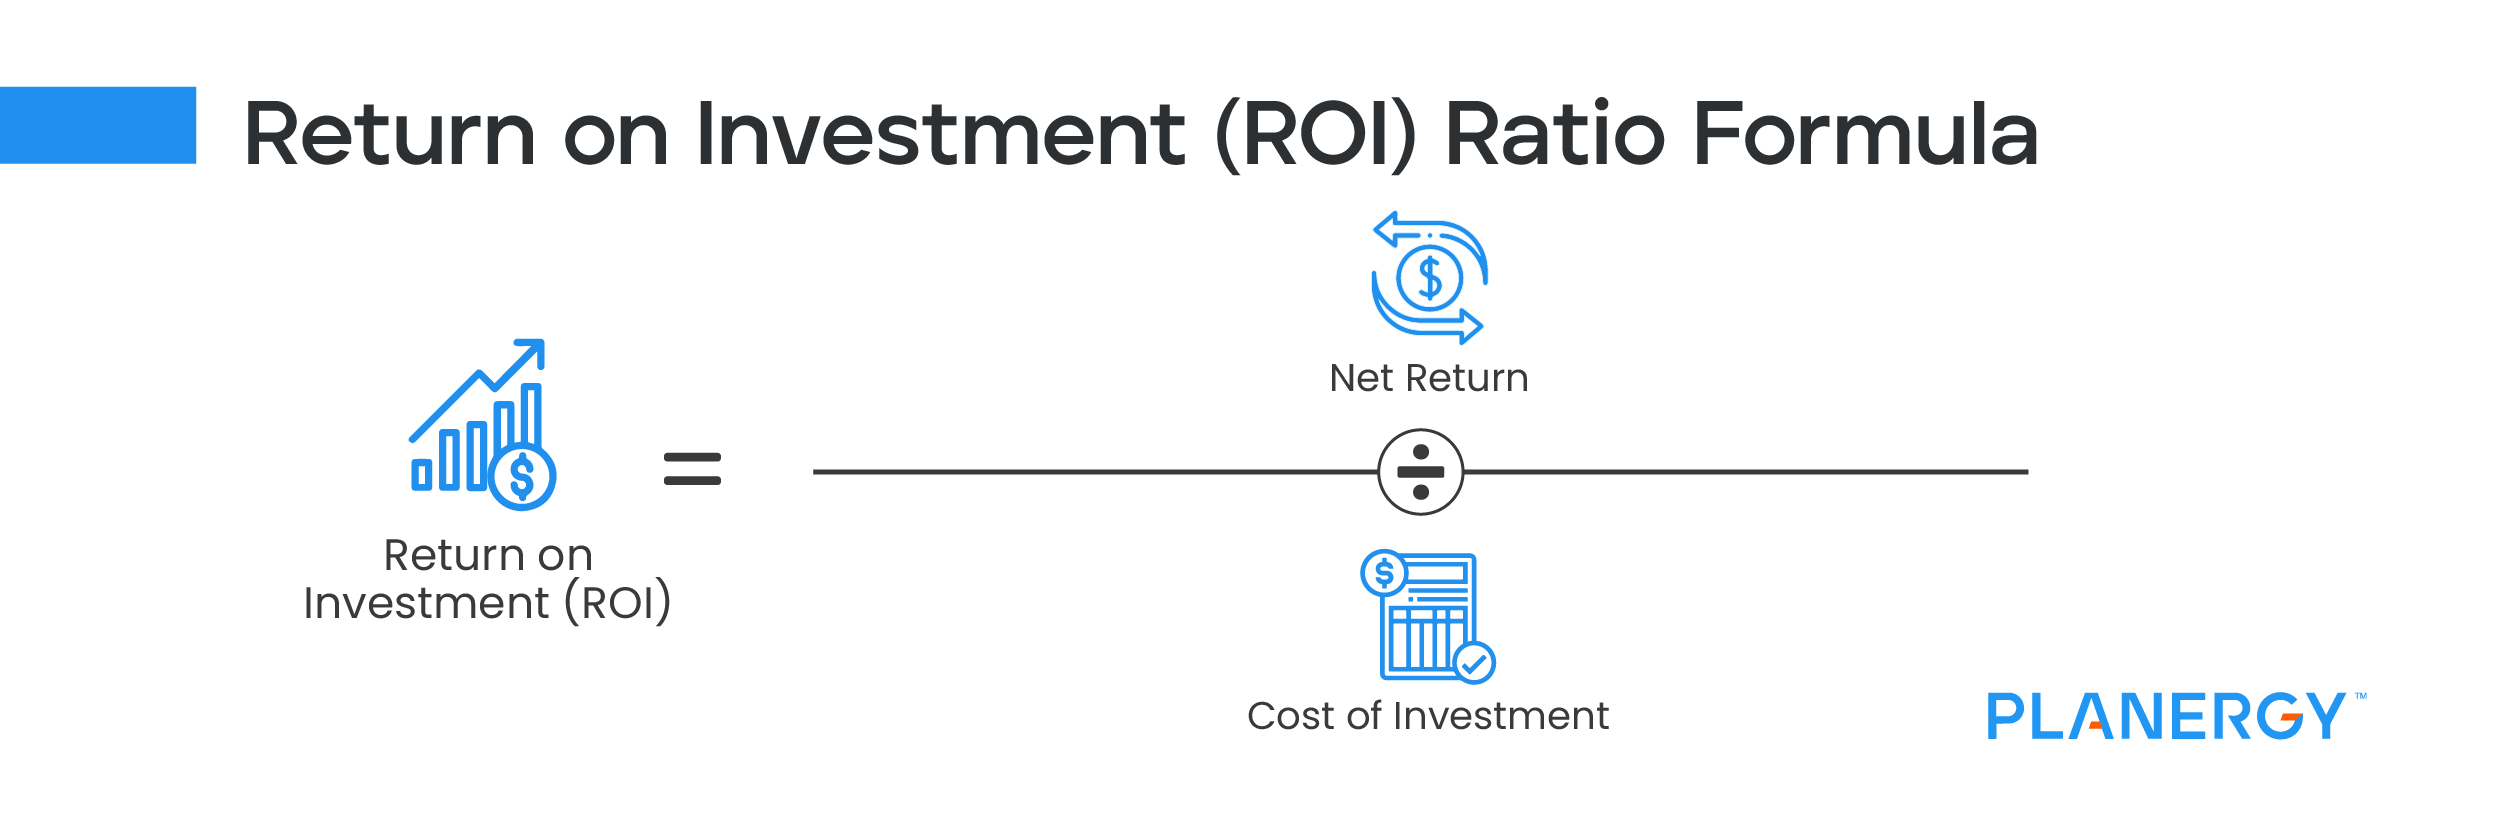 Return on Investment Ratio Formula